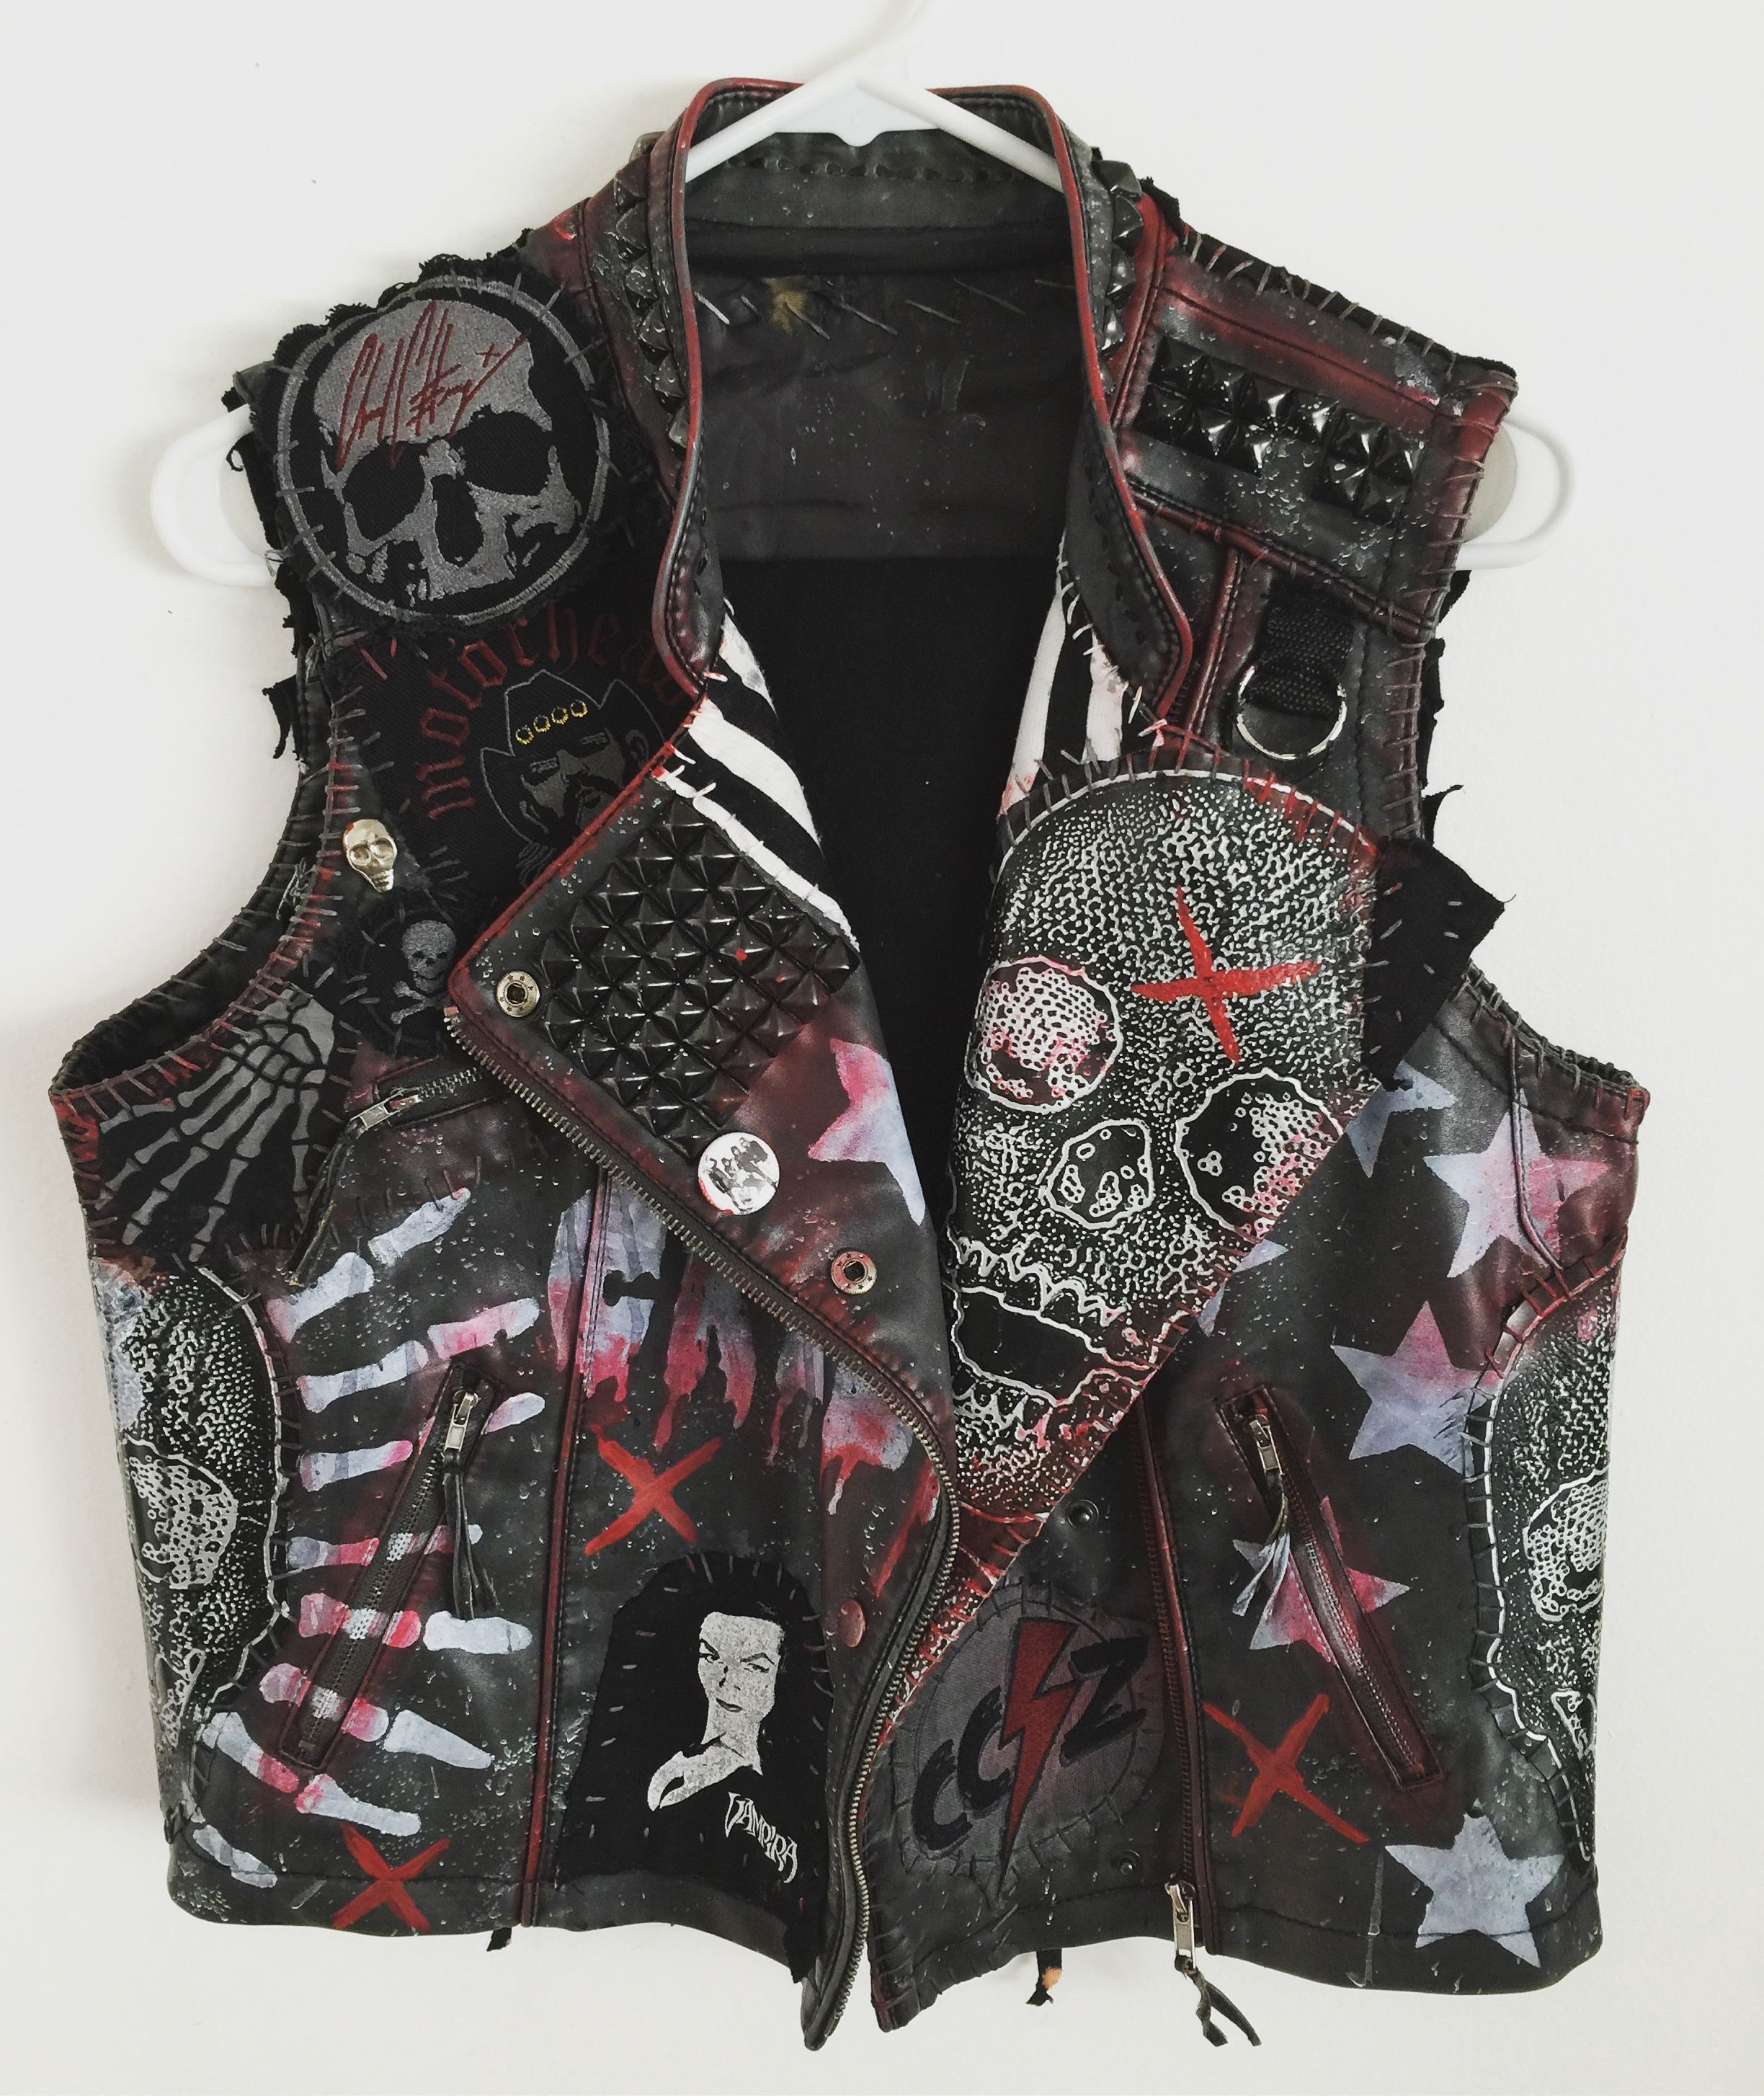 Rocker vest. Punk Rock vest. Heavy Metal vest. Studded vest. Vegan Leather vest from Chad Cherry Clothing.